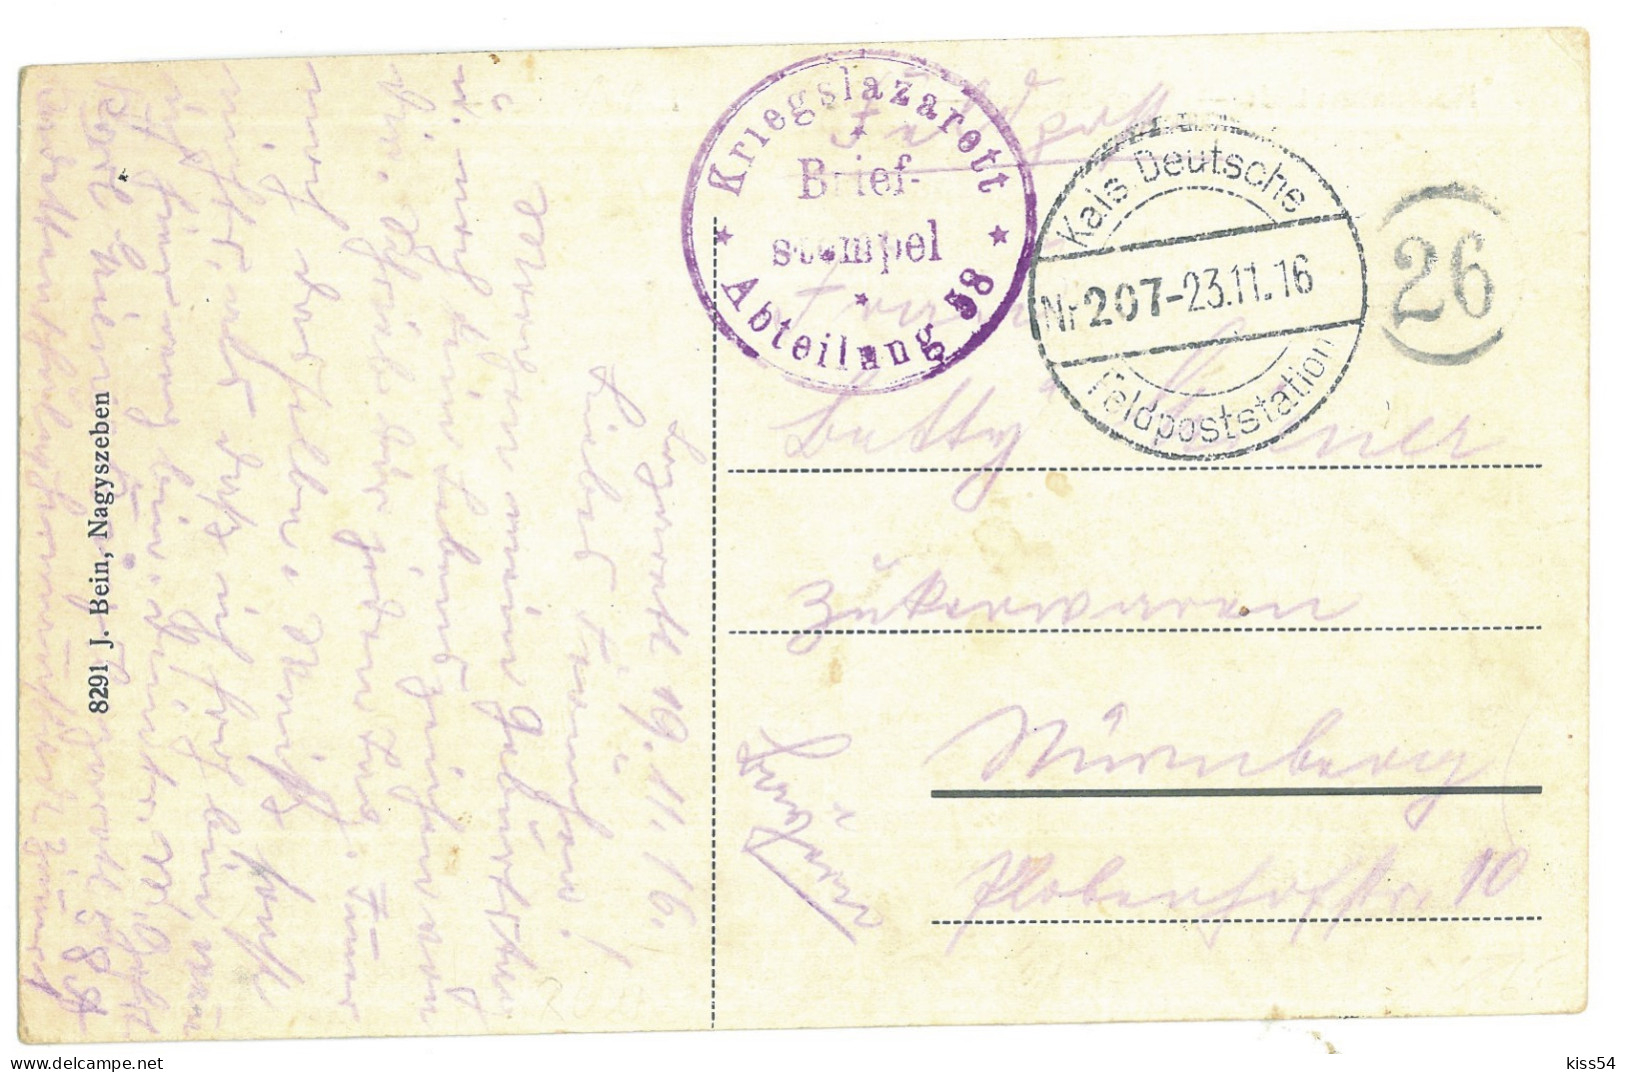 RO 77 - 23704 SIBIU, Tram, Romania - Old Postcard, CENSOR - Used - 1916 - Romania